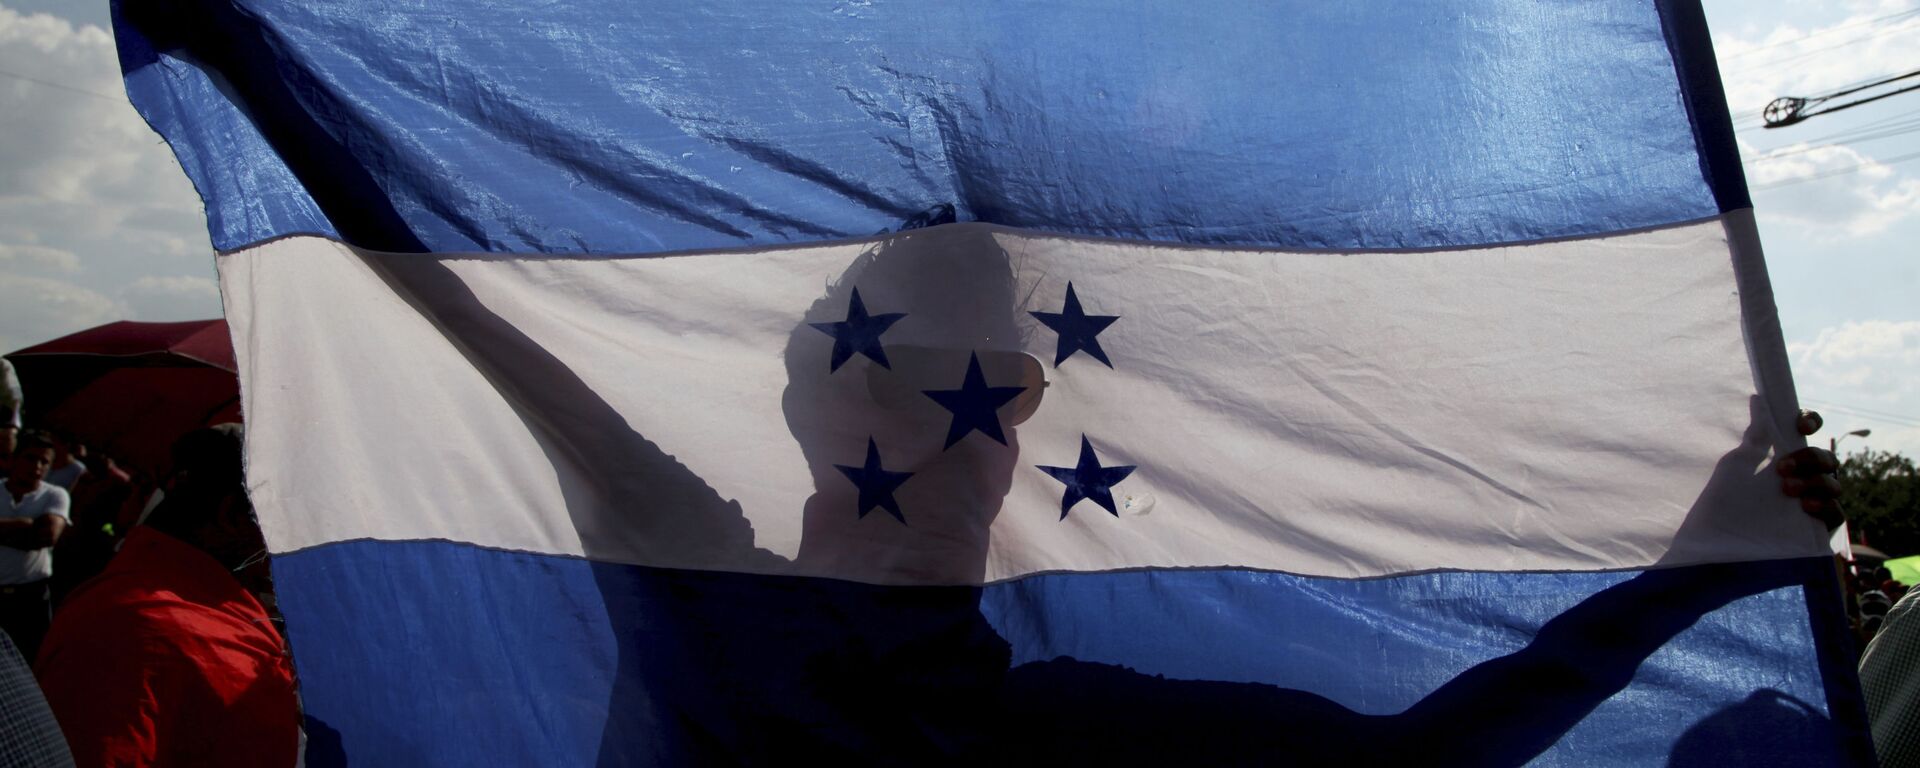 Bandera de Honduras - Sputnik Mundo, 1920, 07.09.2020